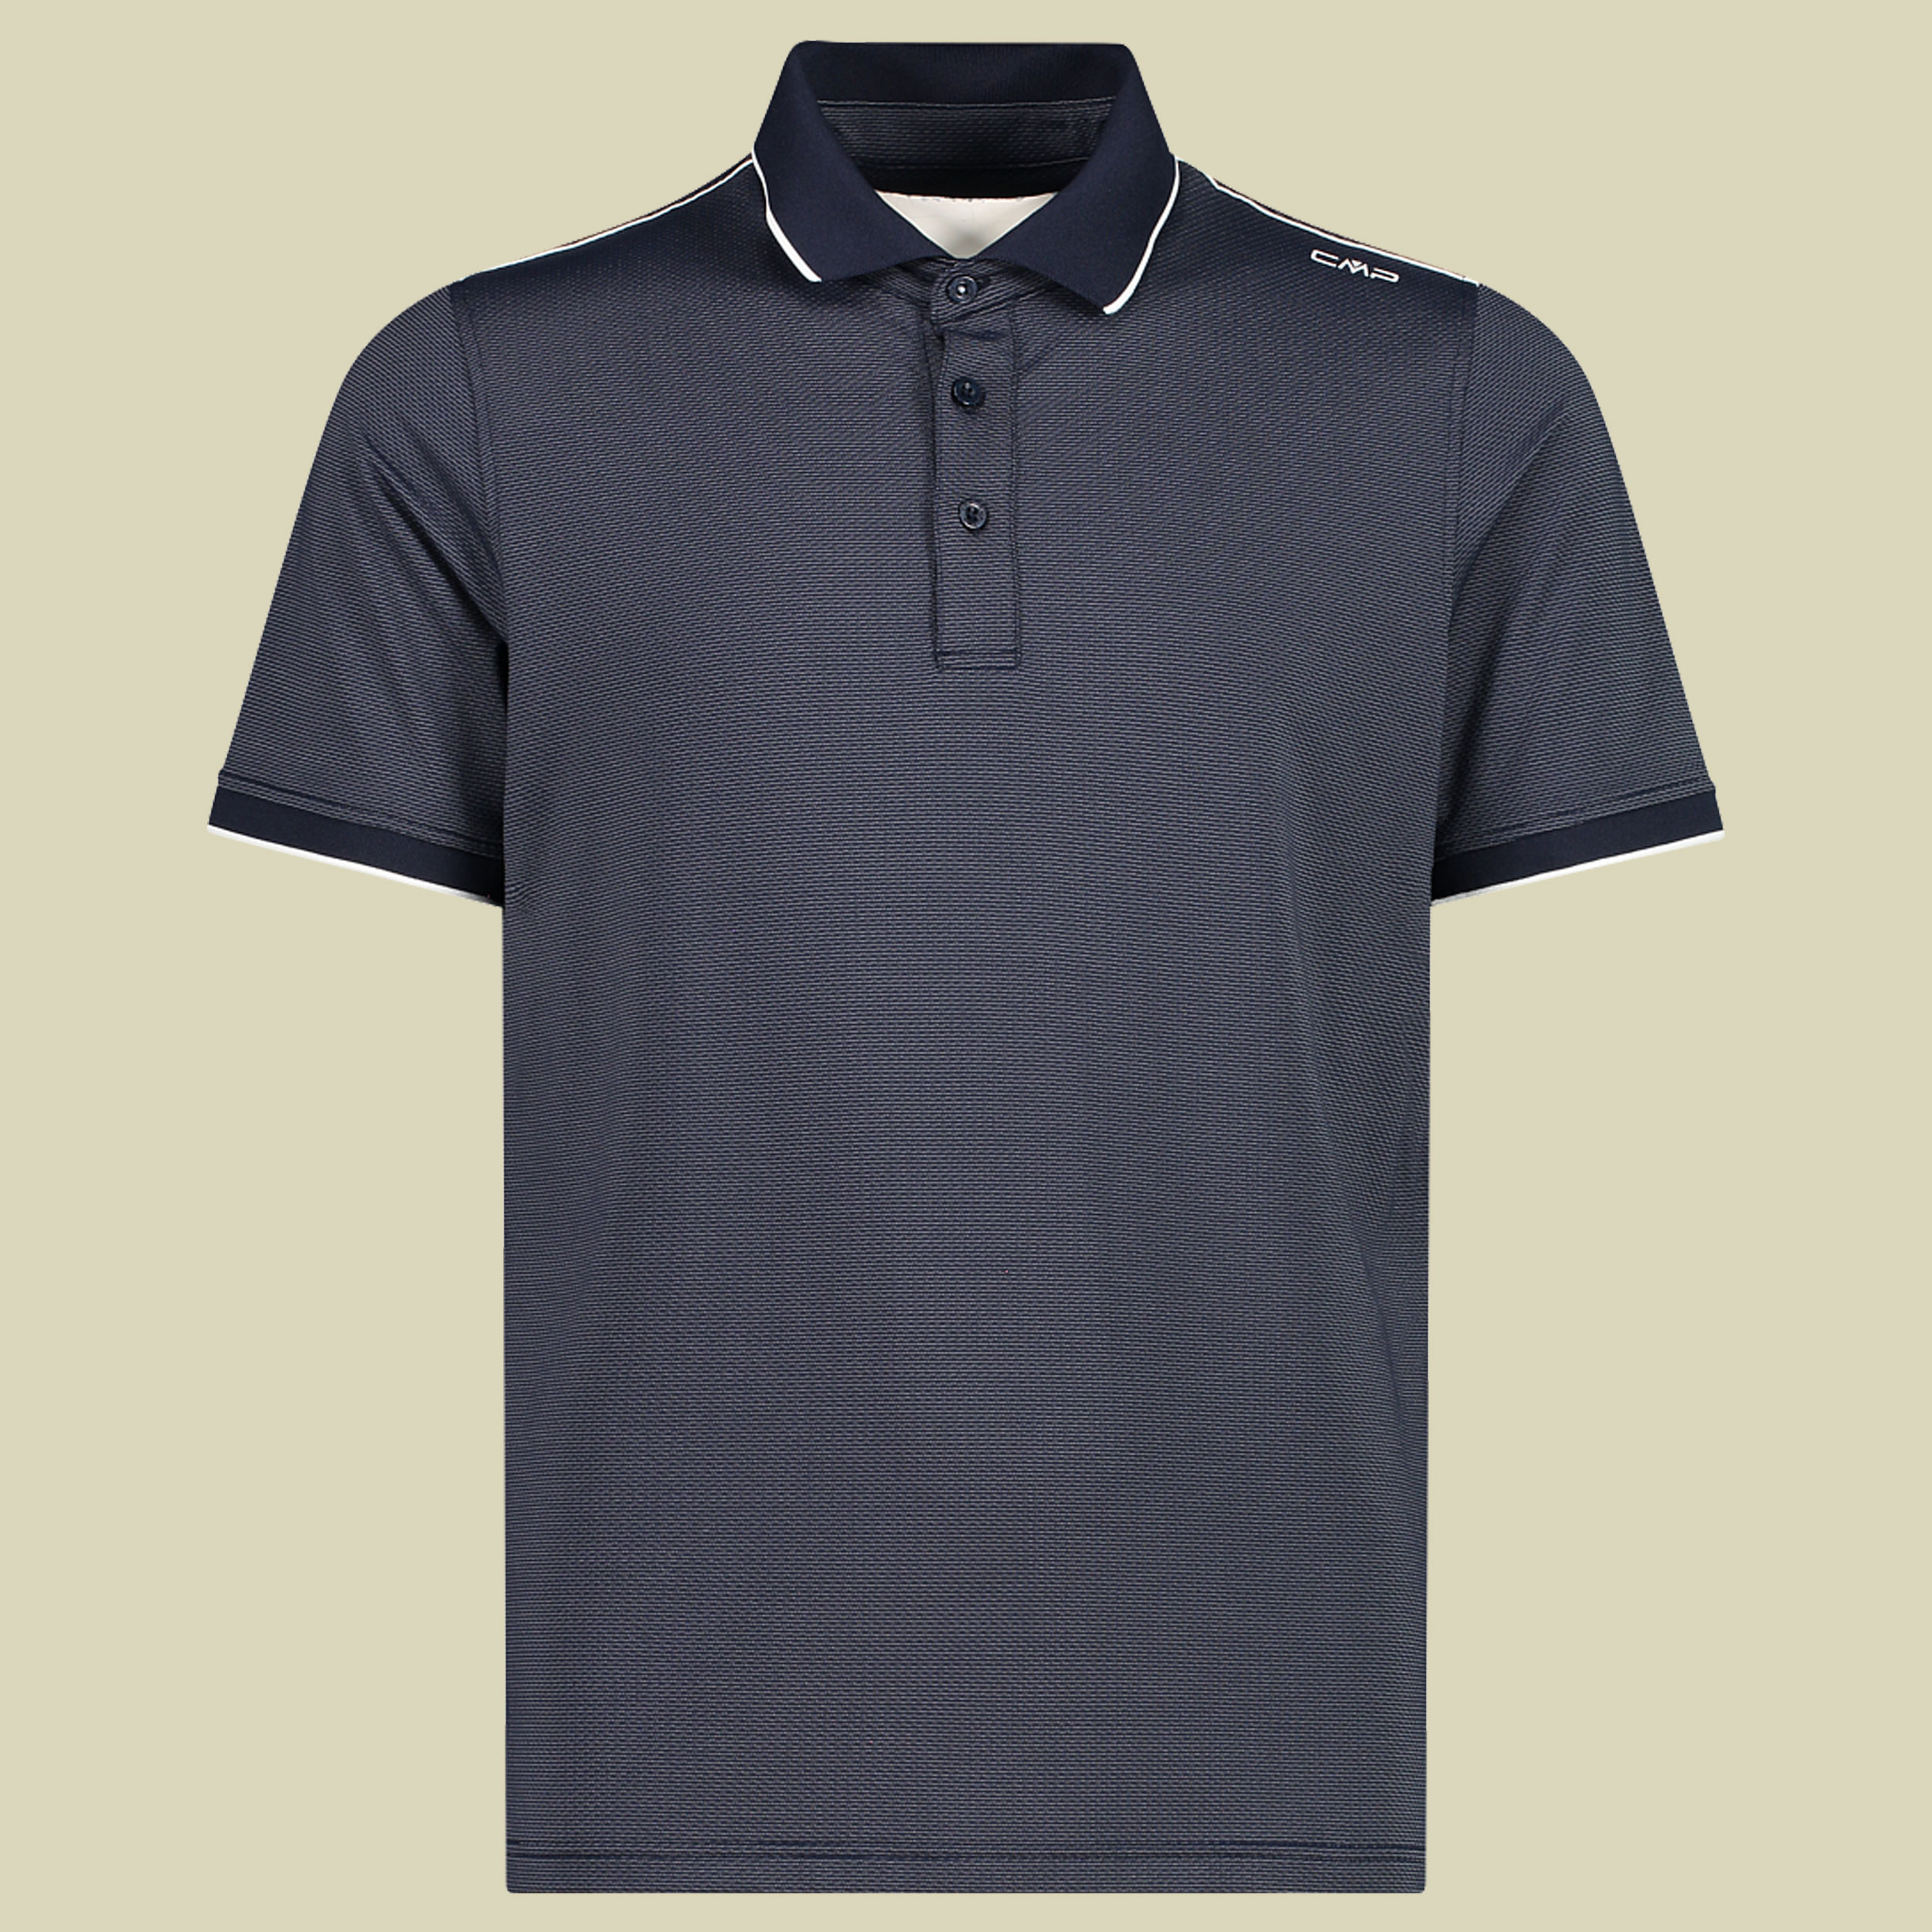 Man Polo Jersey 32T5247 Größe 50 Farbe N950 black blue